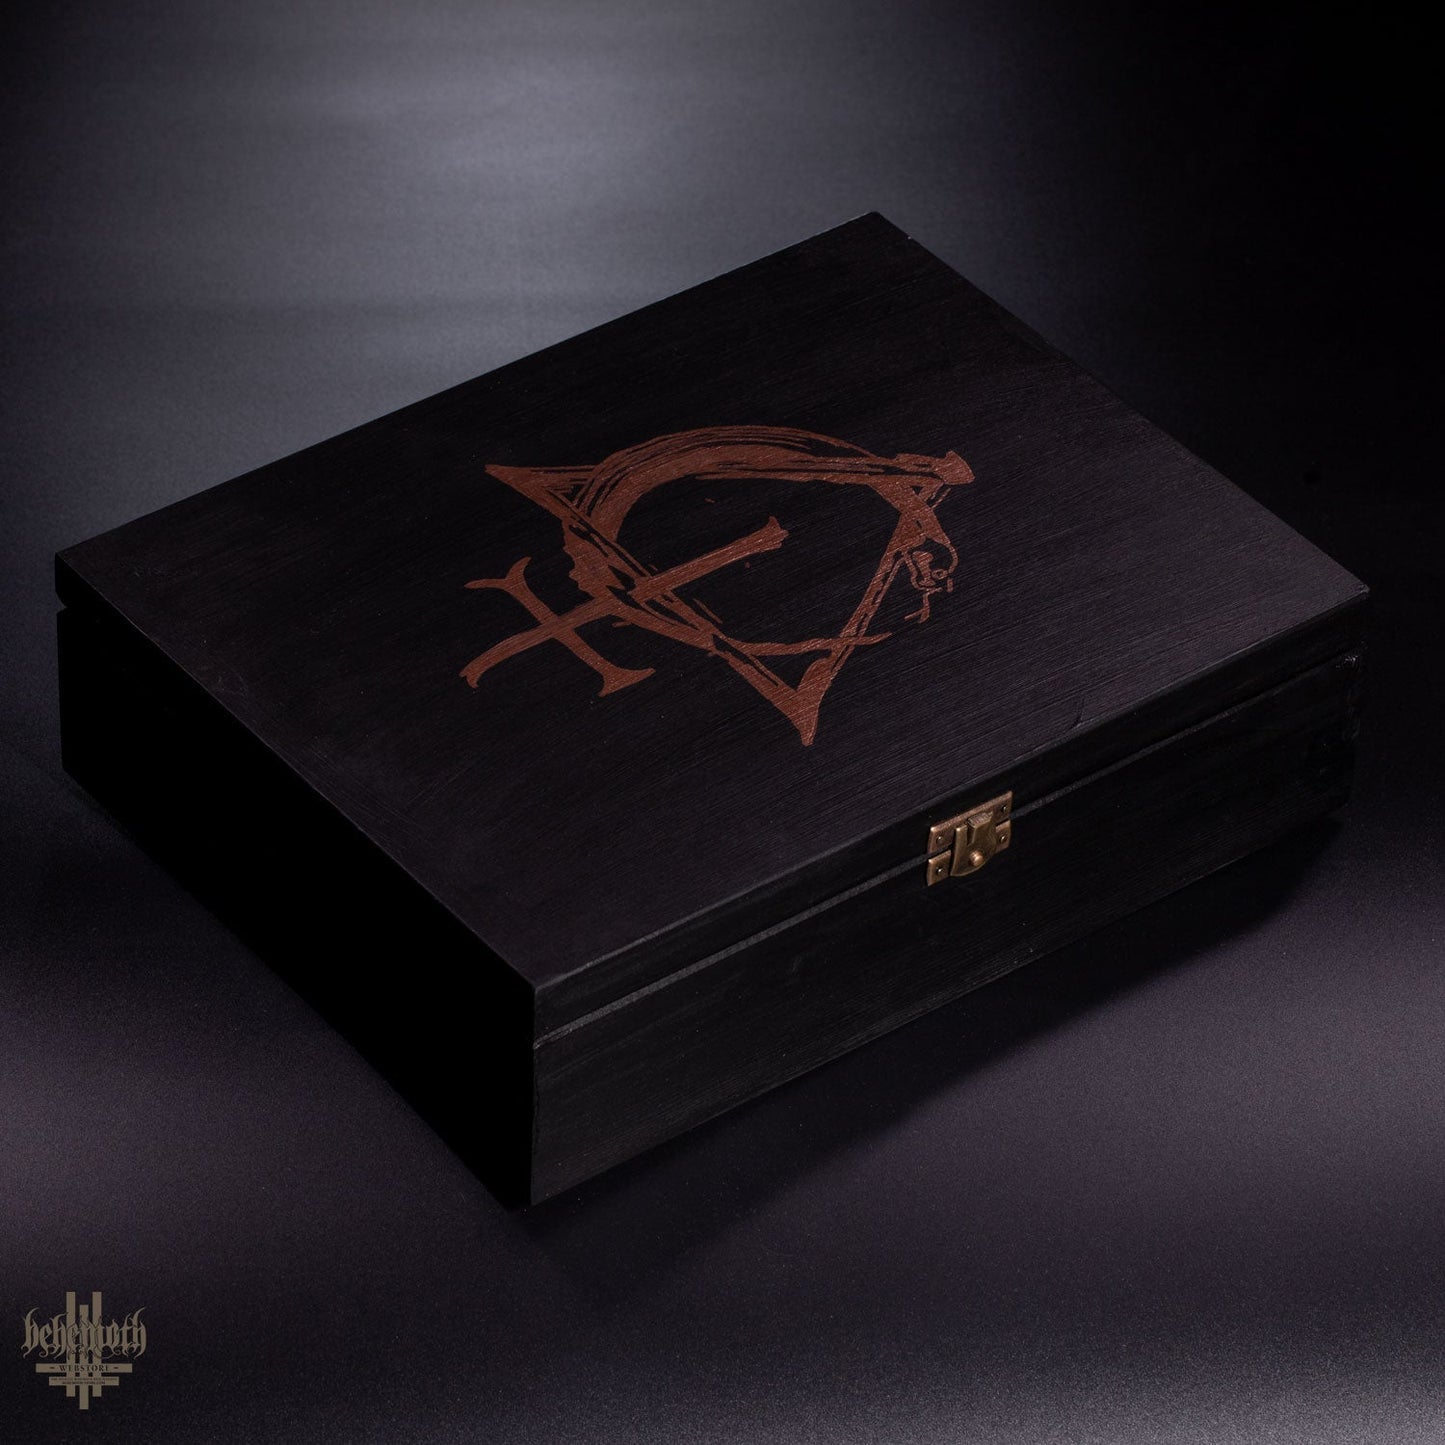 Behemoth 'CONTRA' wooden box case